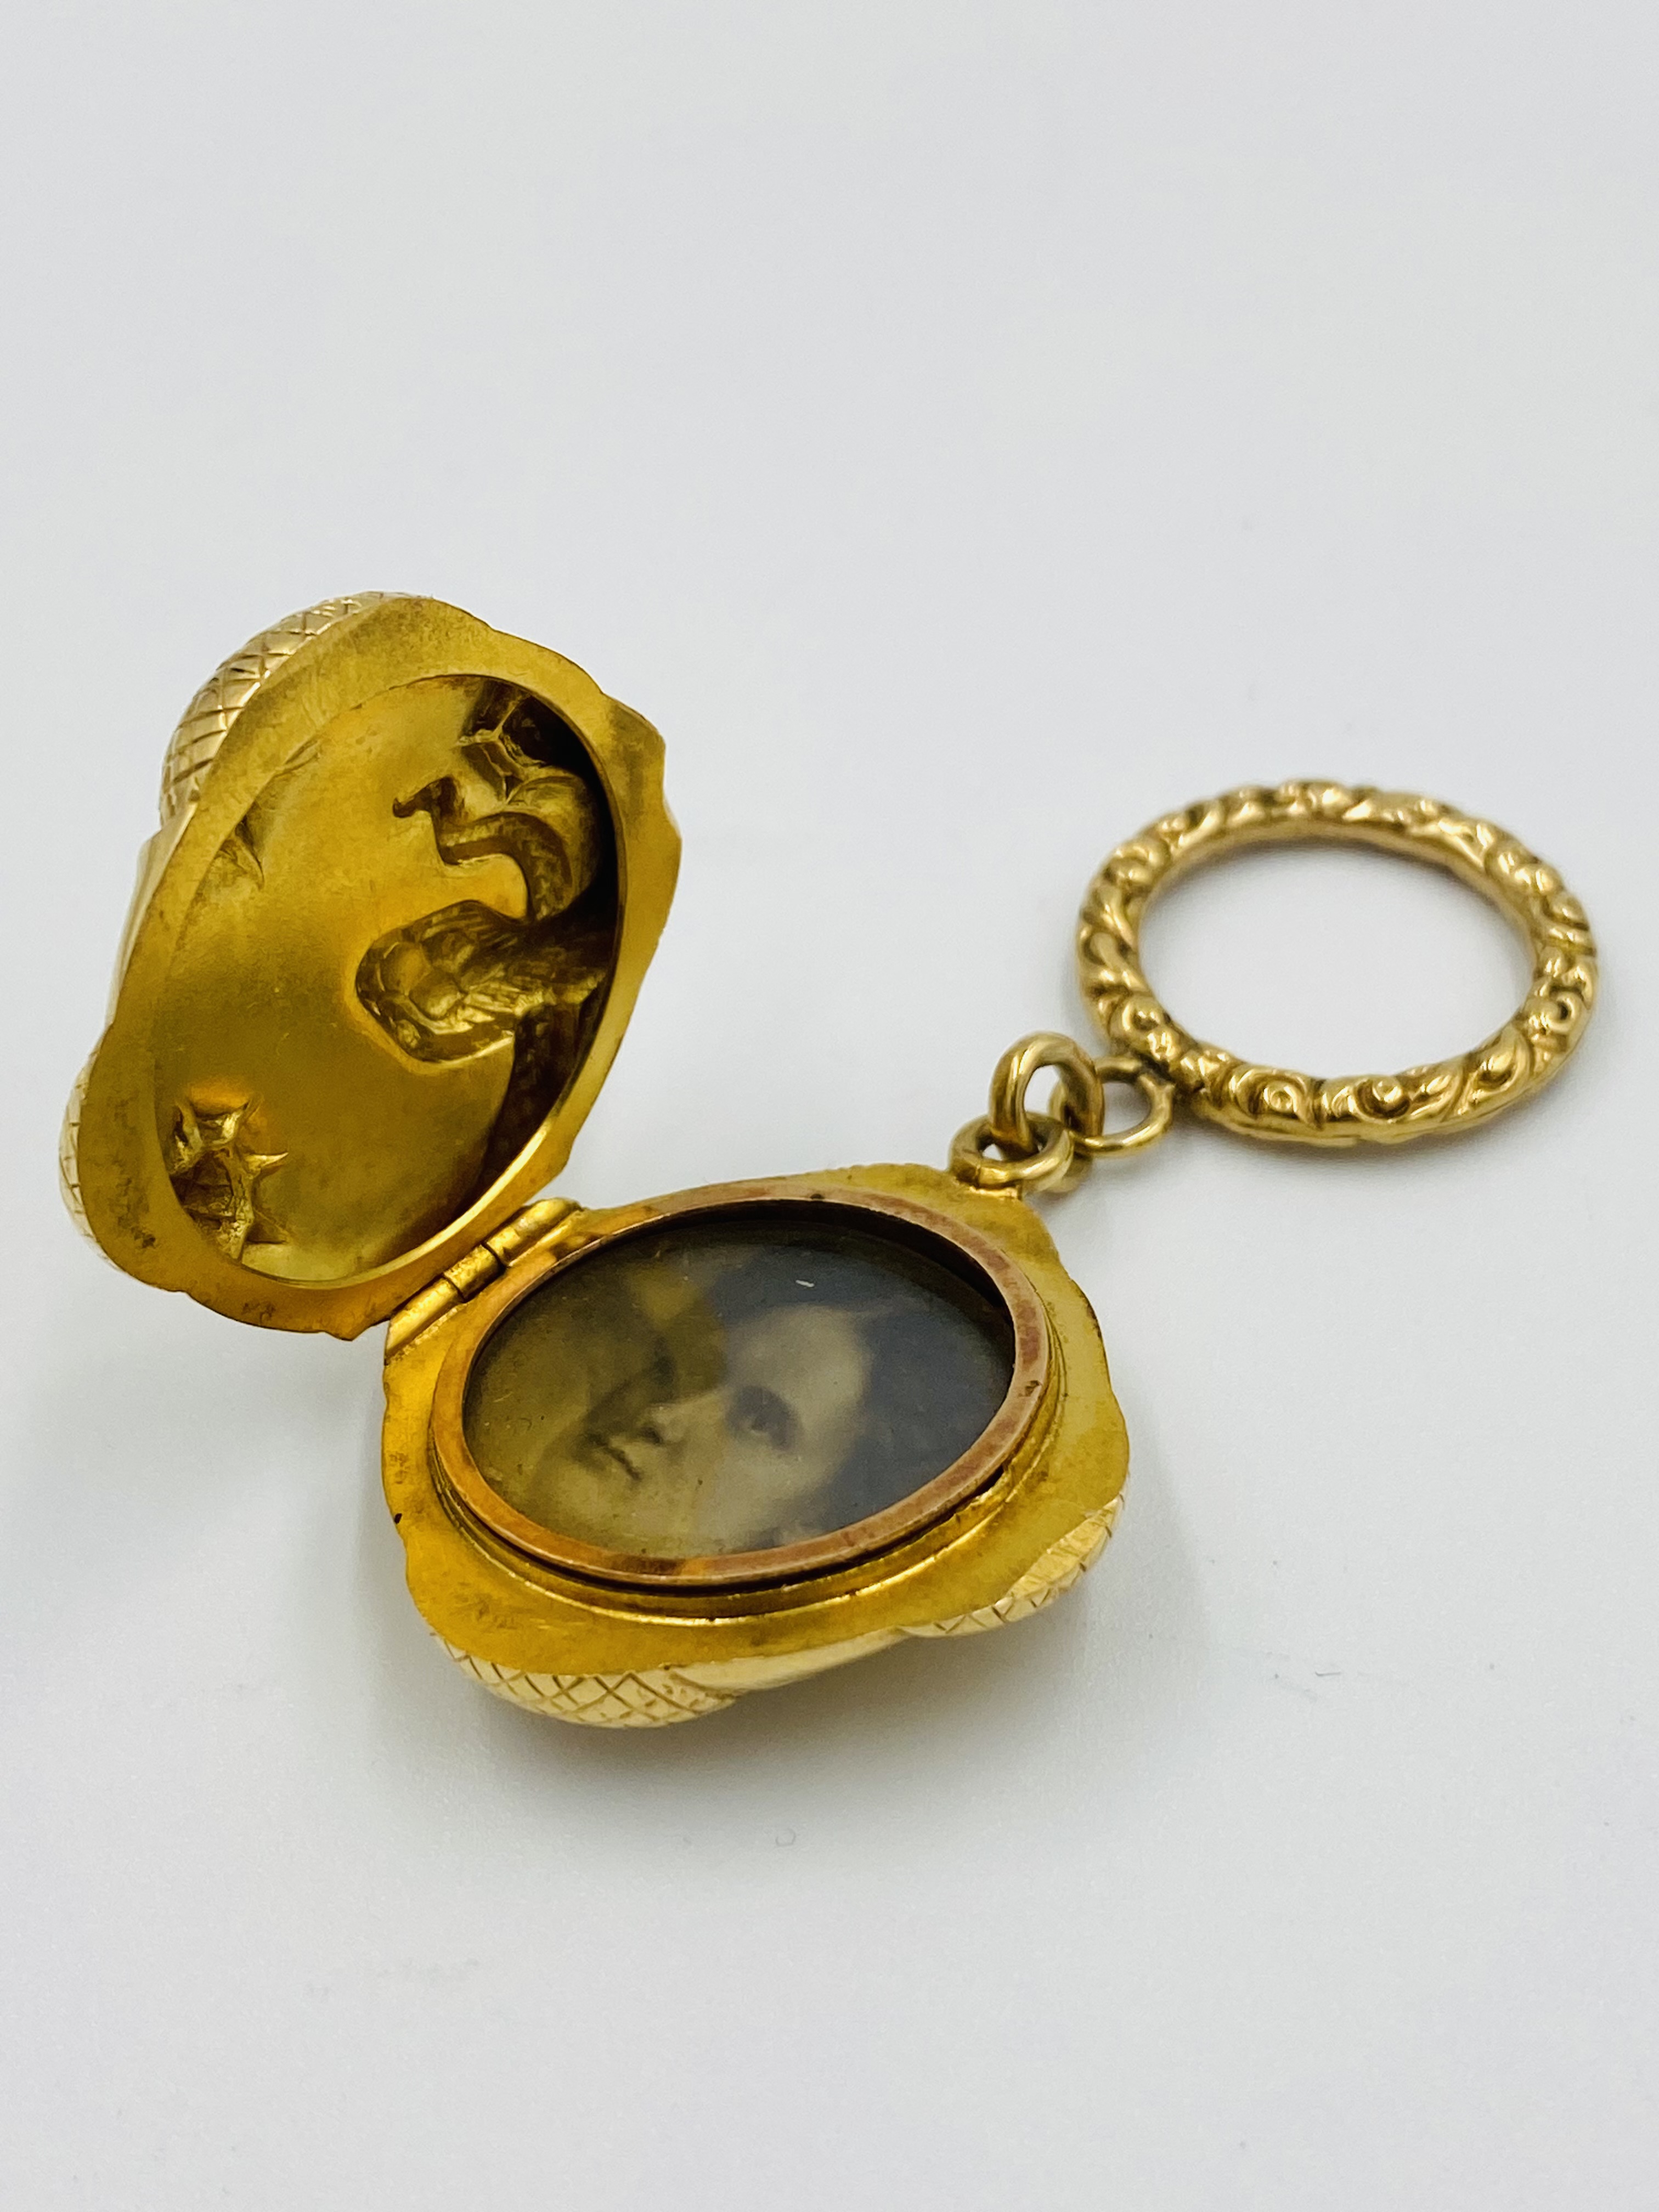 Gold locket - Image 3 of 3